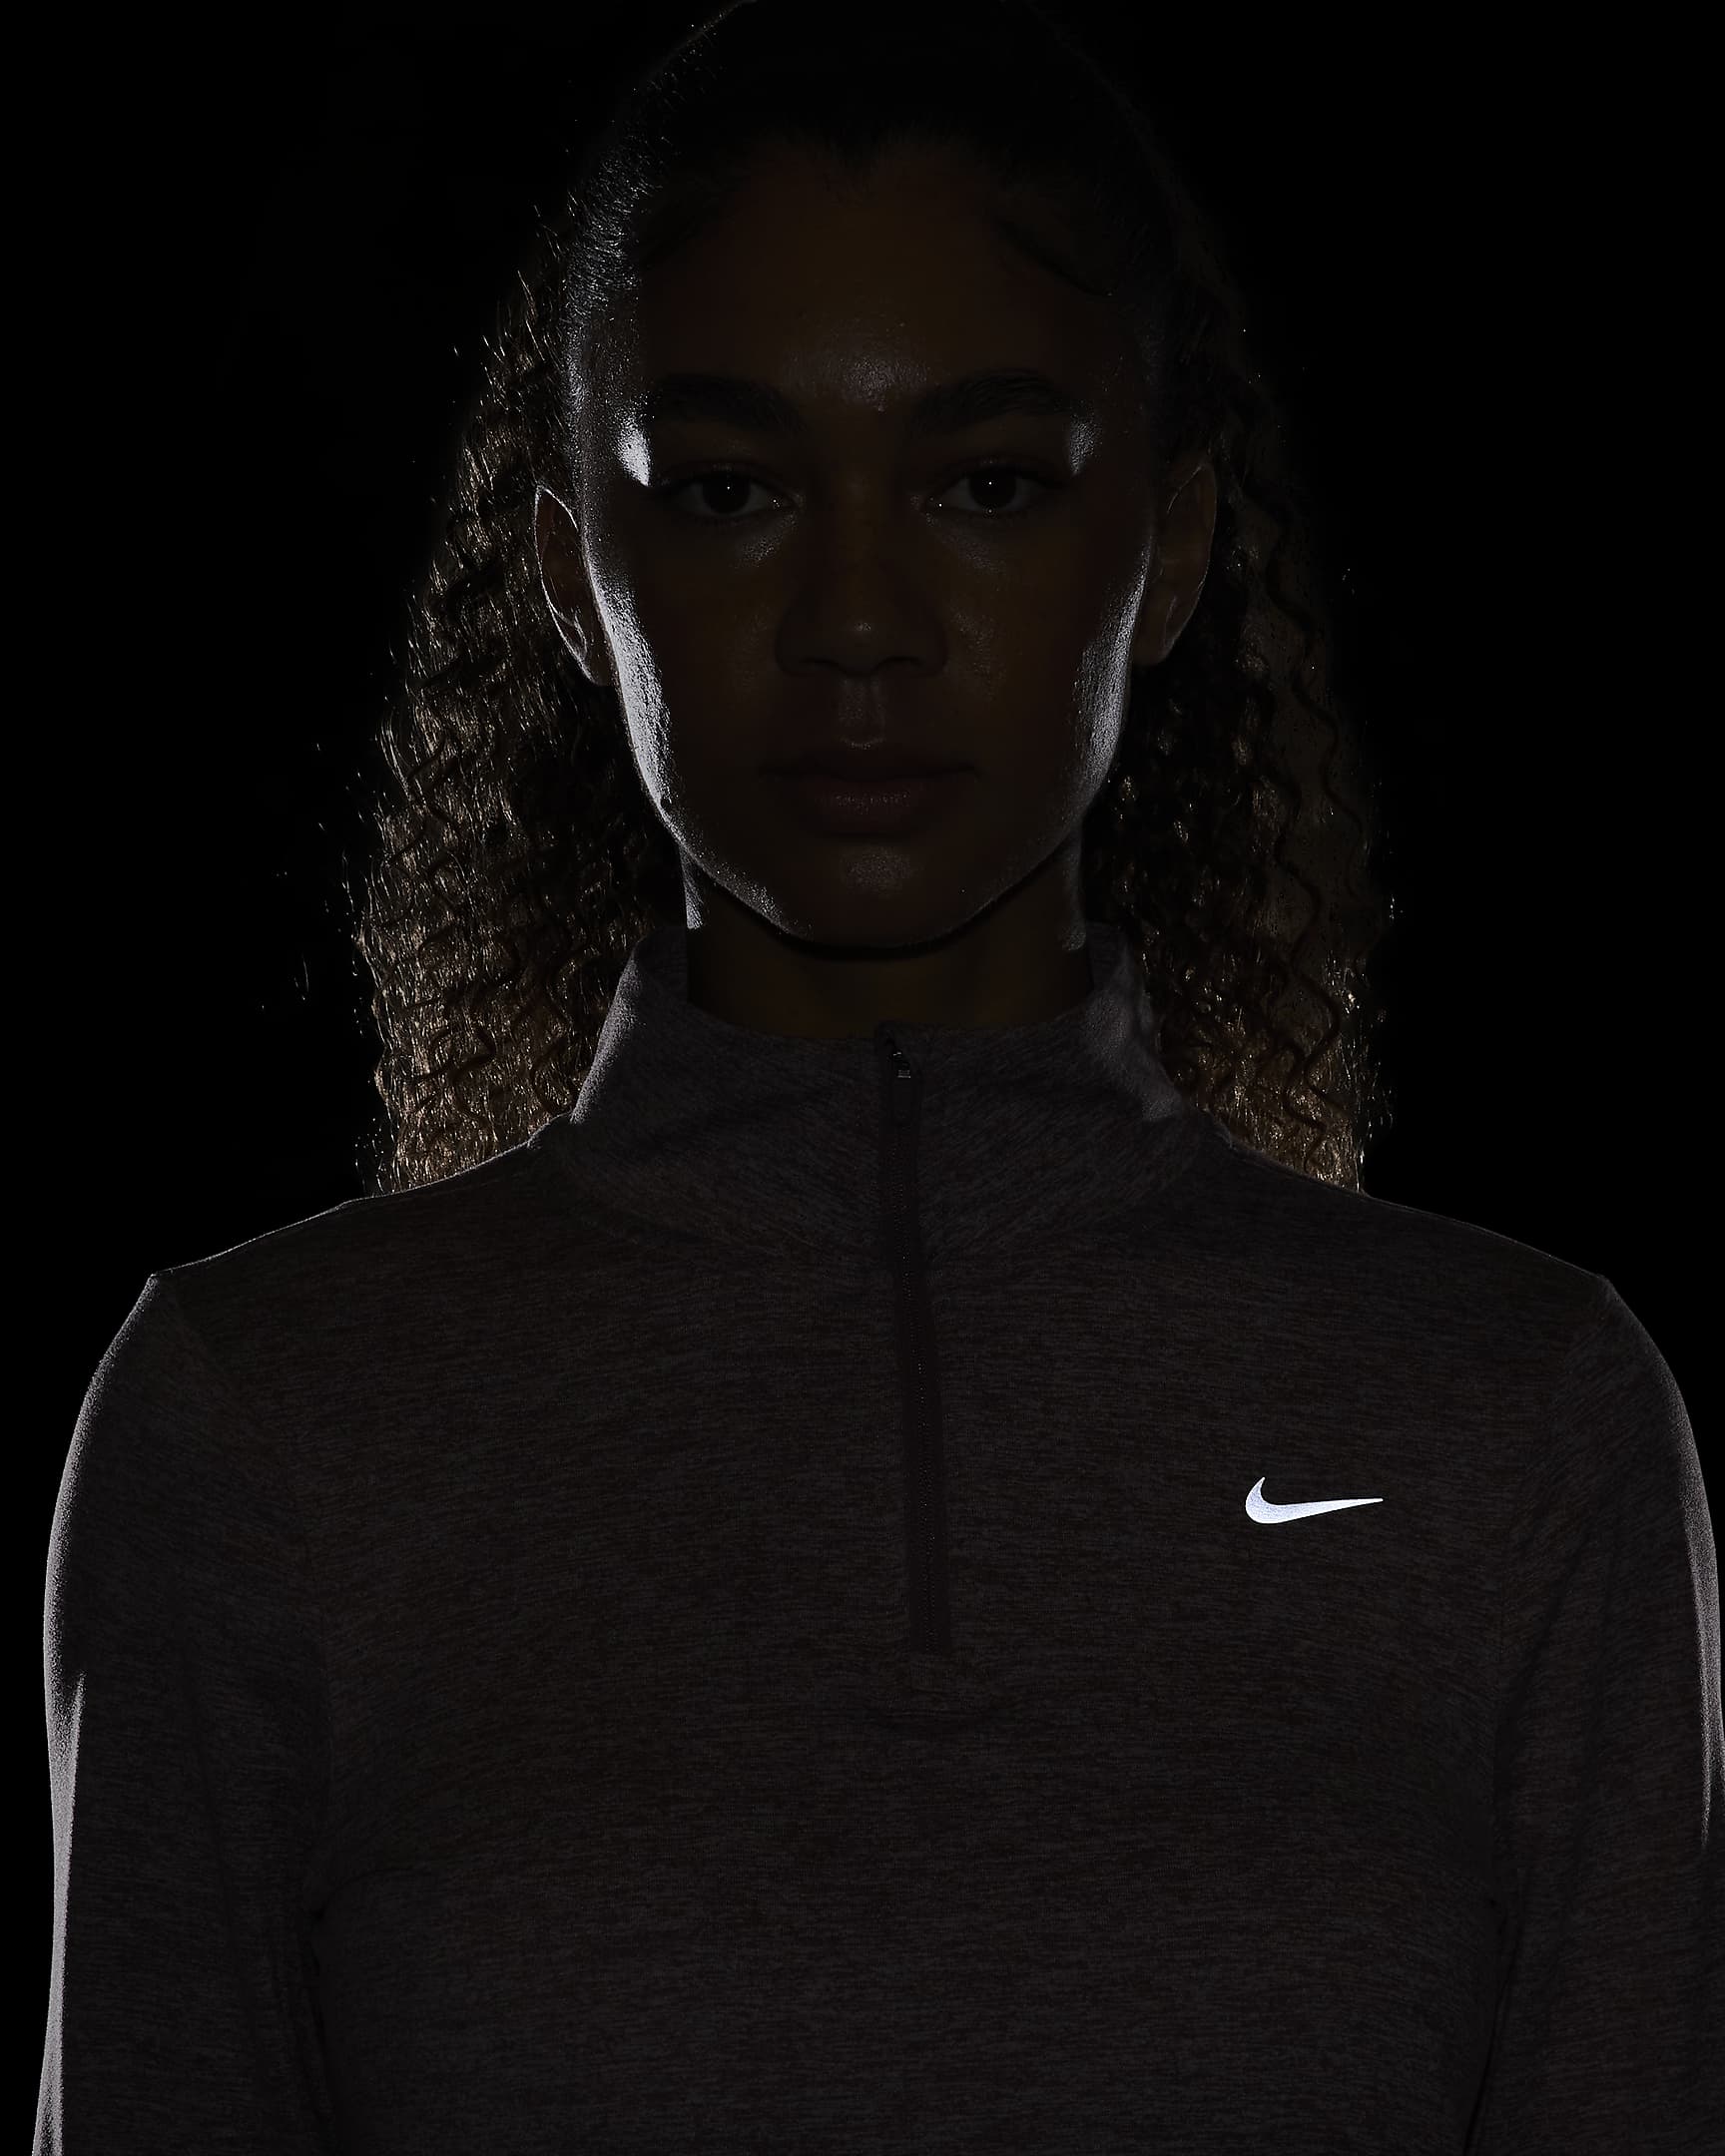 Nike Swift Element Women's UV Protection 1/4-Zip Running Top. Nike.com